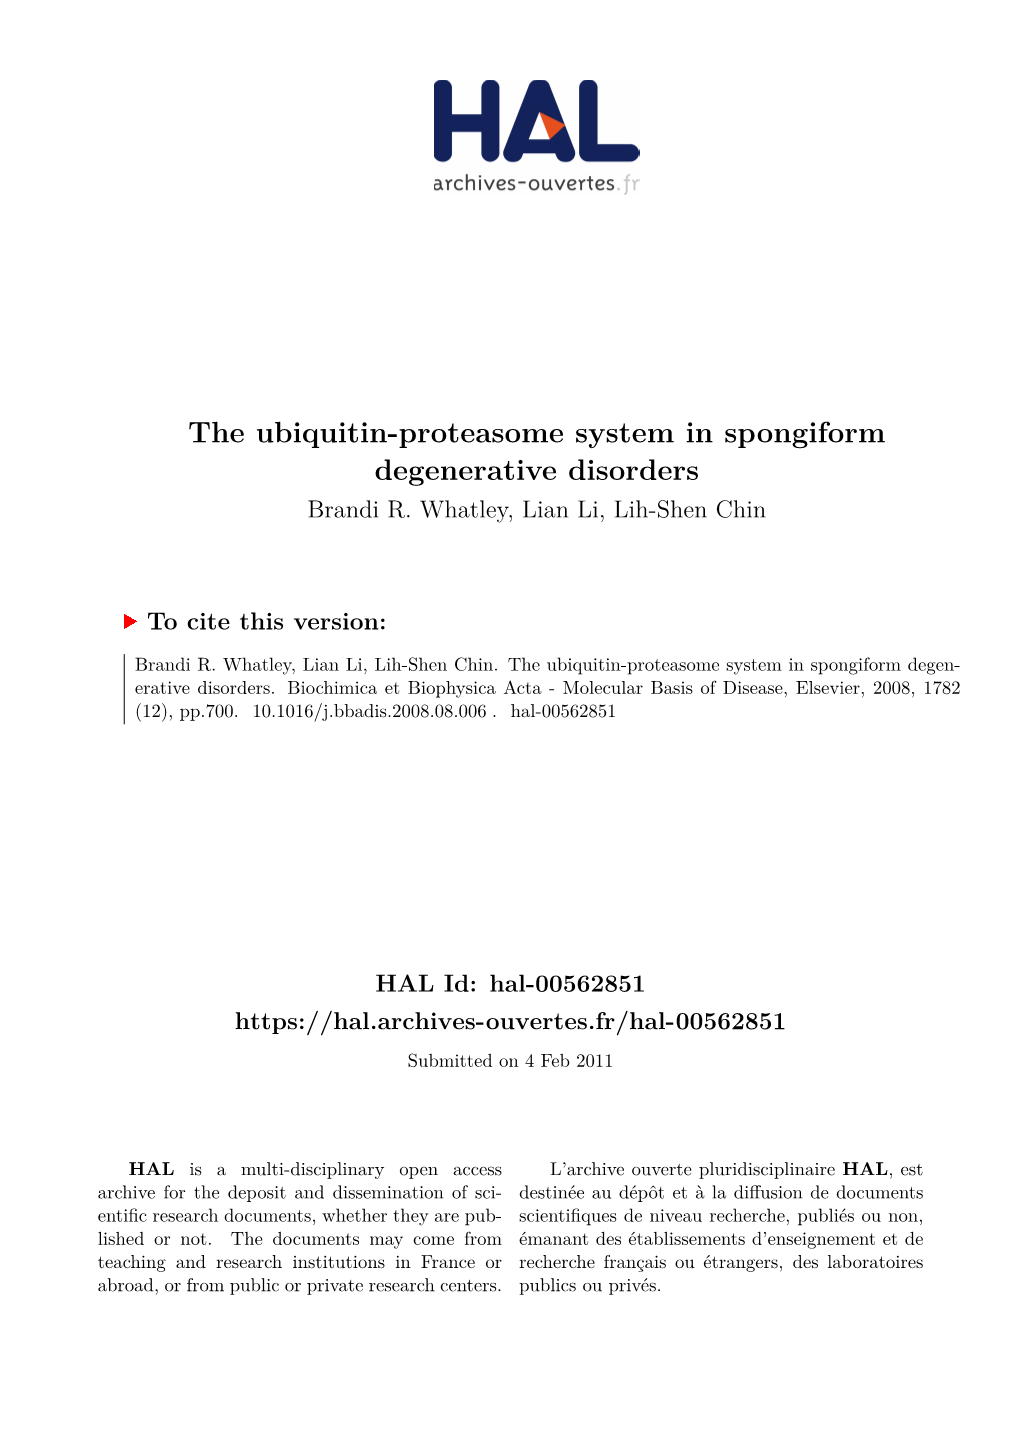 The Ubiquitin-Proteasome System in Spongiform Degenerative Disorders Brandi R